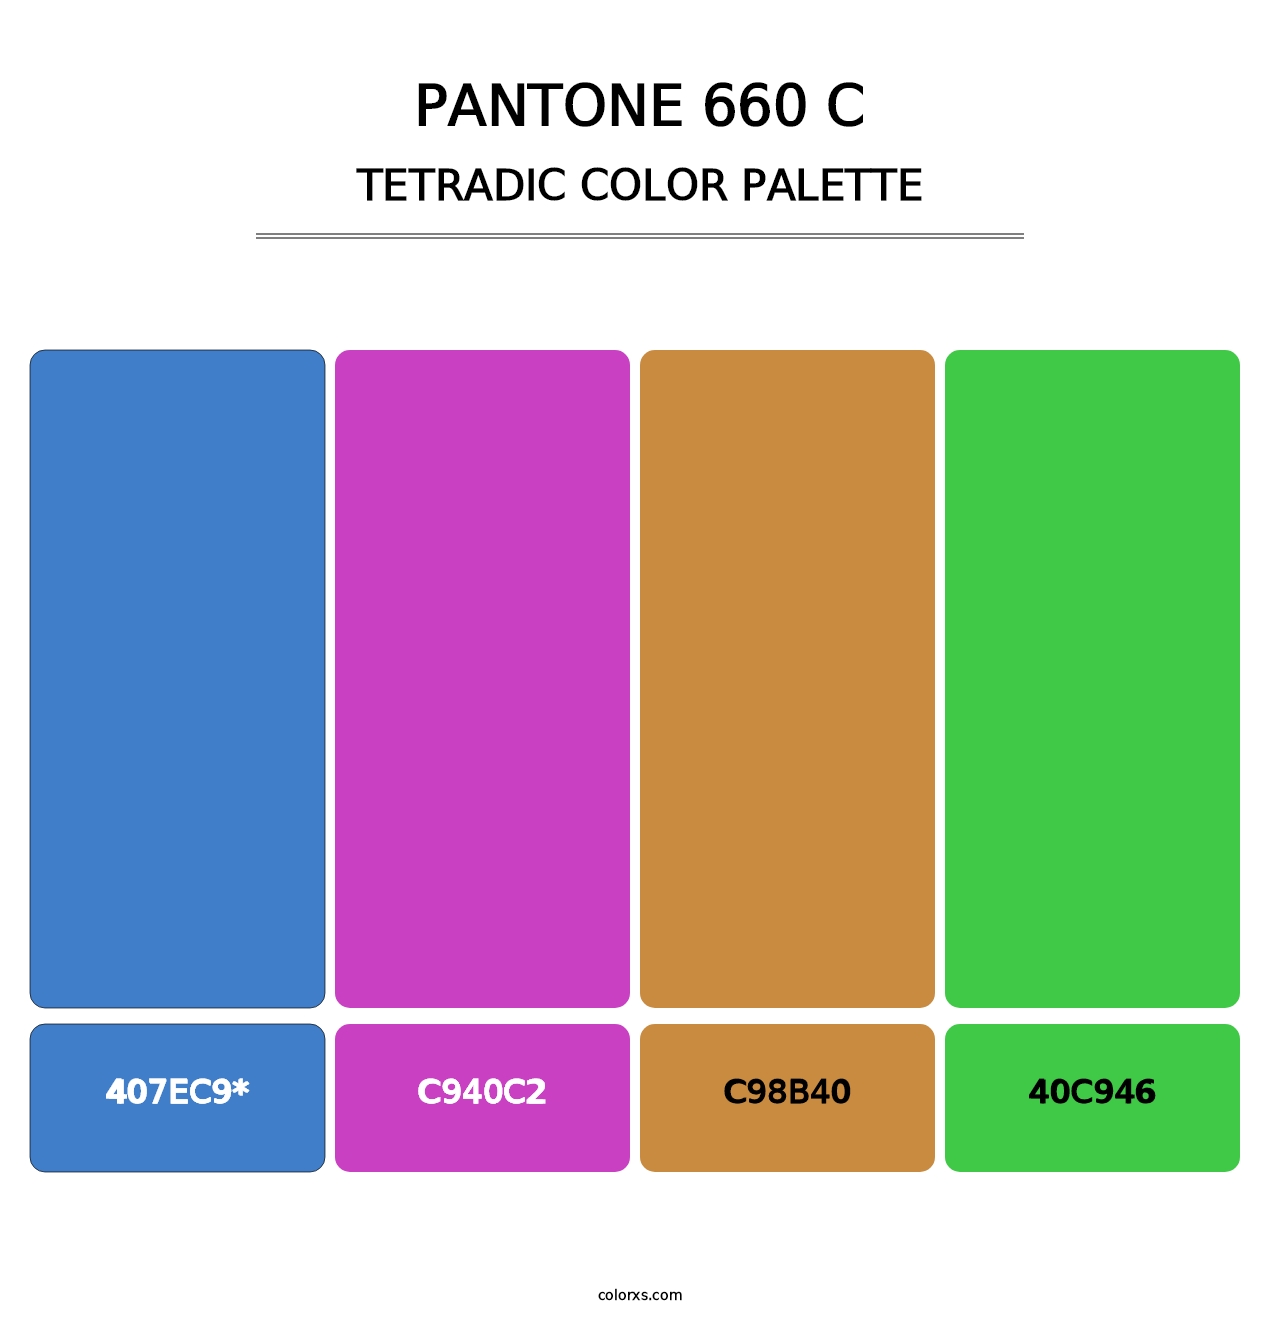 PANTONE 660 C - Tetradic Color Palette